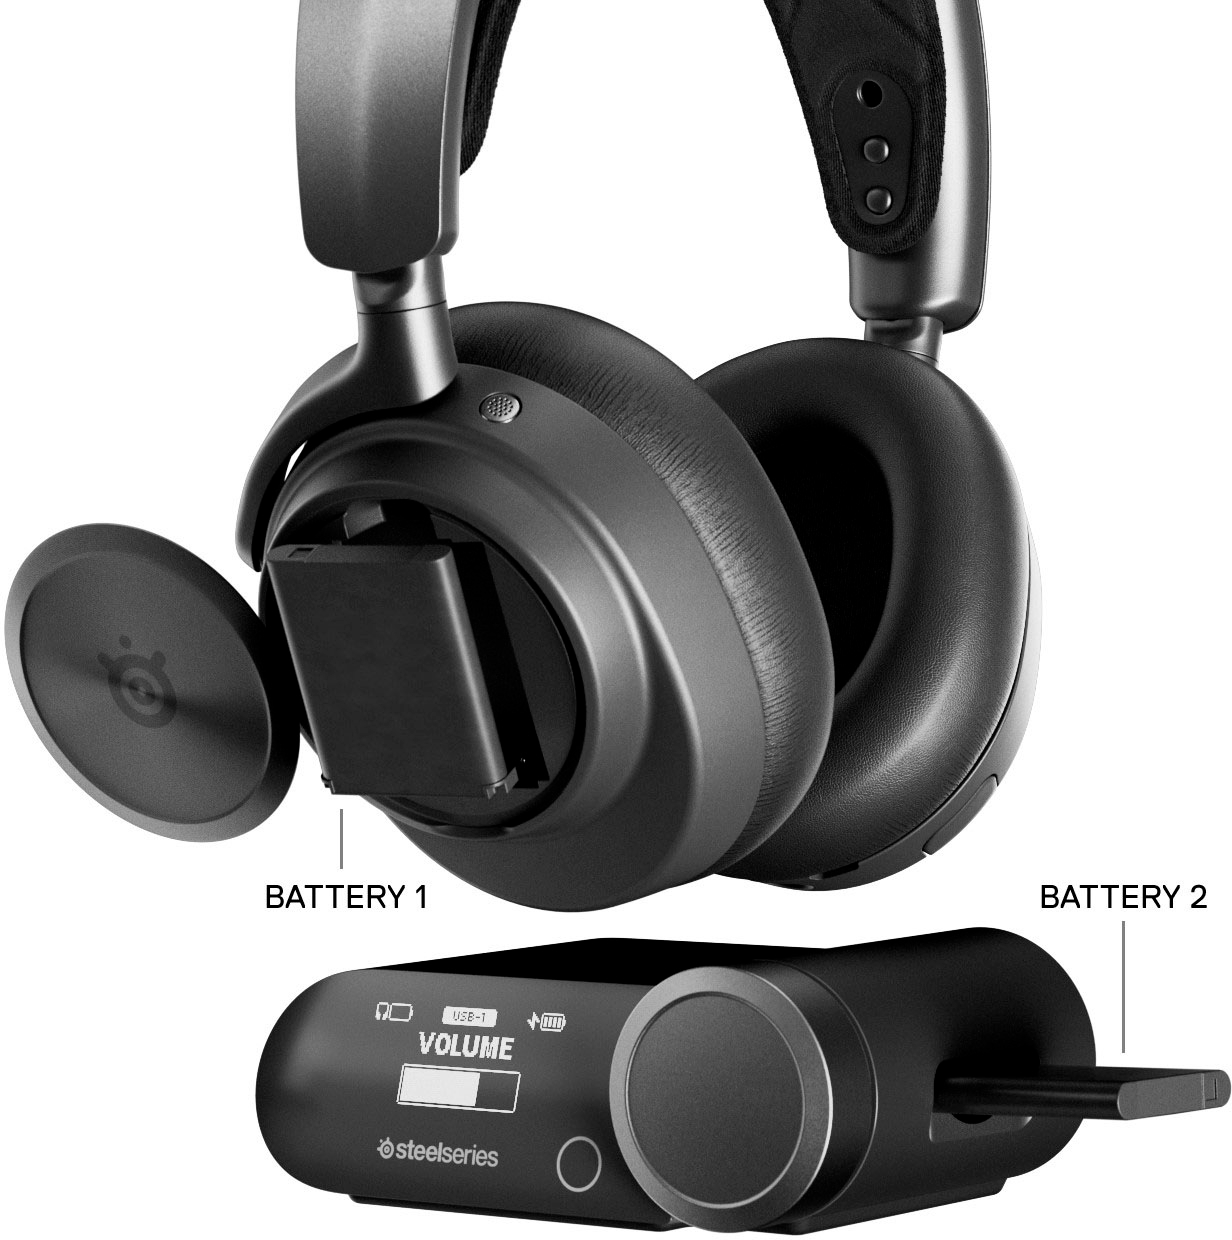 SteelSeries Arctis Nova Pro Wireless Gaming Headset - 61521